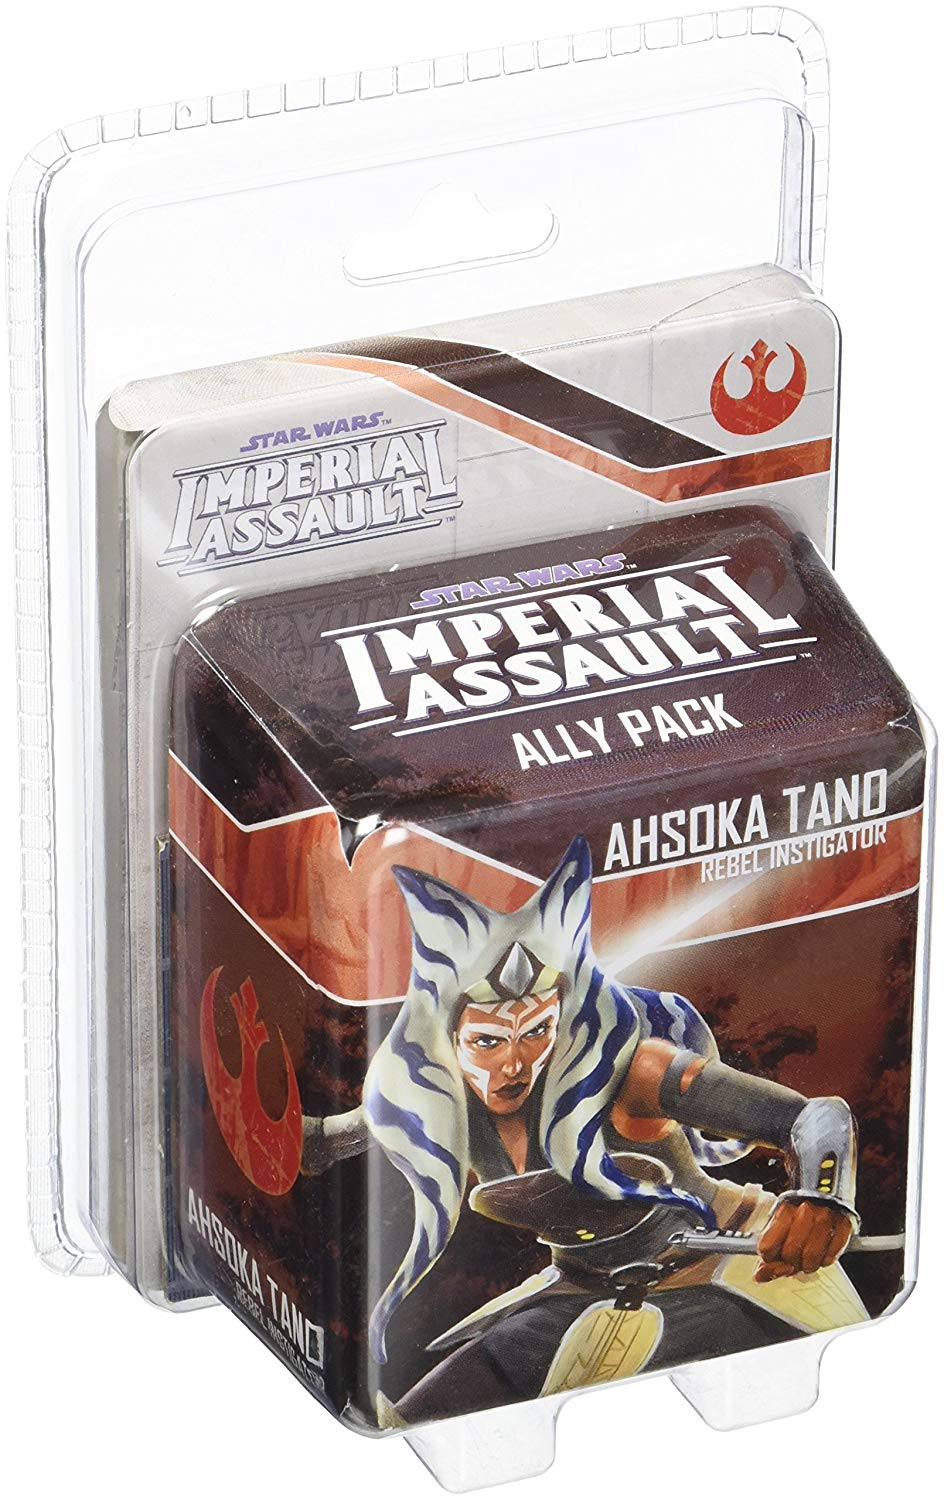 Star Wars Imperial Assault: Ahsoka Tano Ally Pack